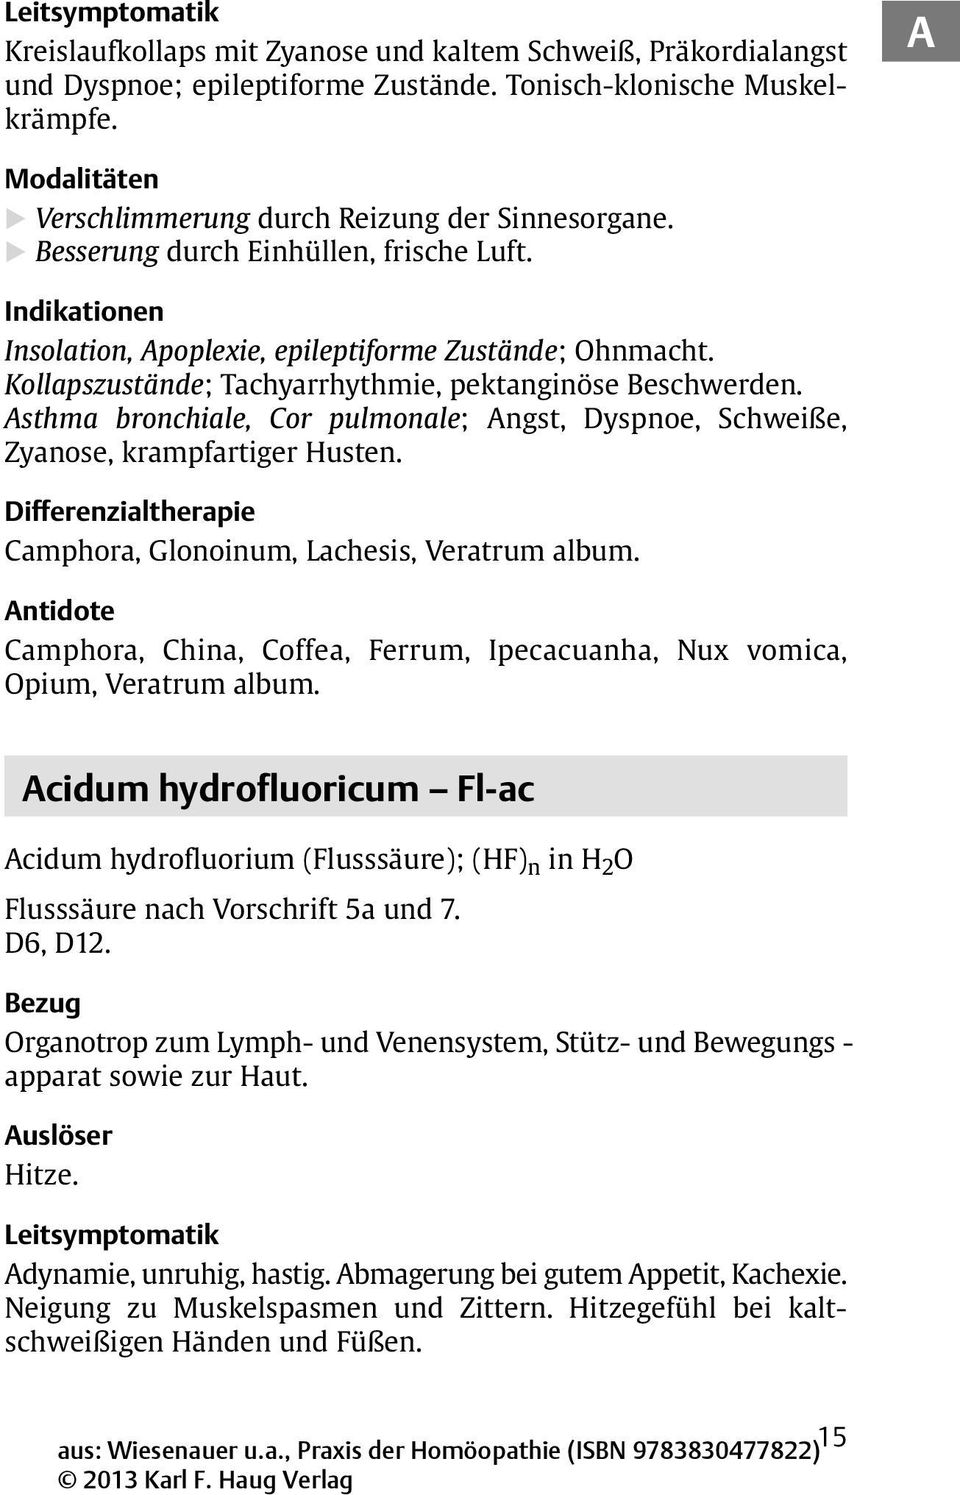 Asthma bronchiale, Cor pulmonale; Angst, Dyspnoe, Schweiße, Zyanose, krampfartiger Husten. Camphora, Glonoinum, Lachesis, Veratrum album.